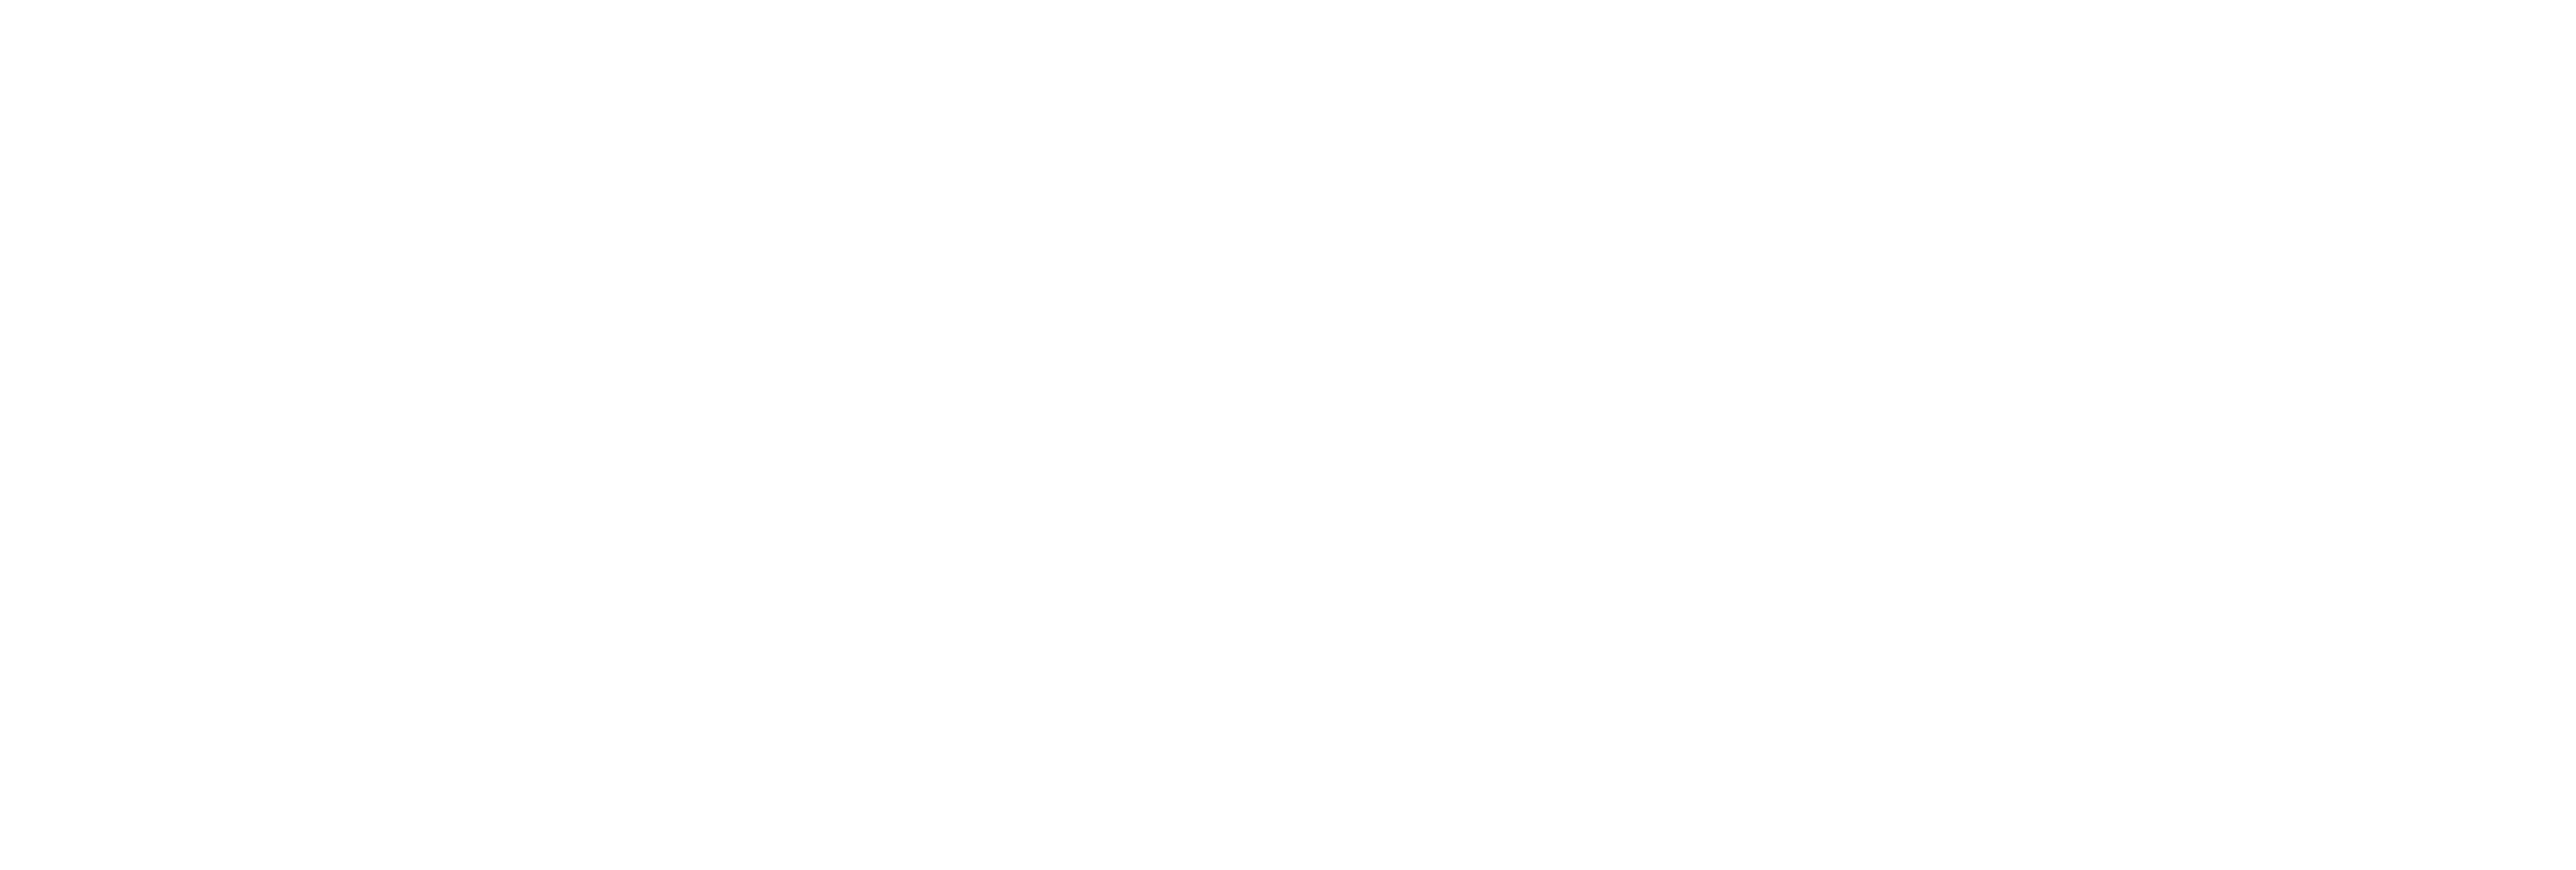 AniCura Jaén Norte Clínica Veterinaria logo